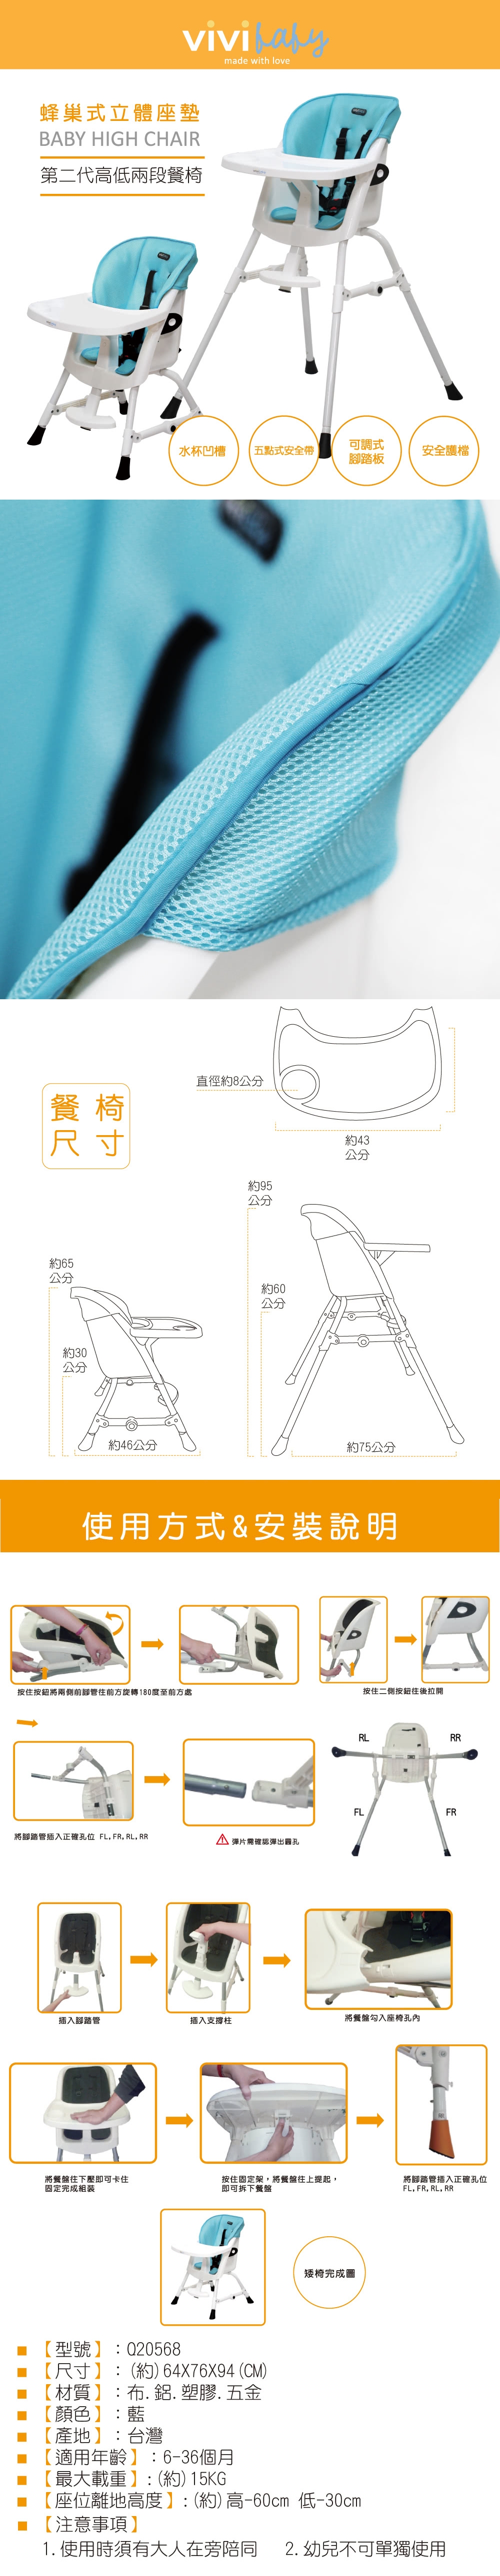 ViViBaby - 蜂巢式高低兩段高腳餐椅